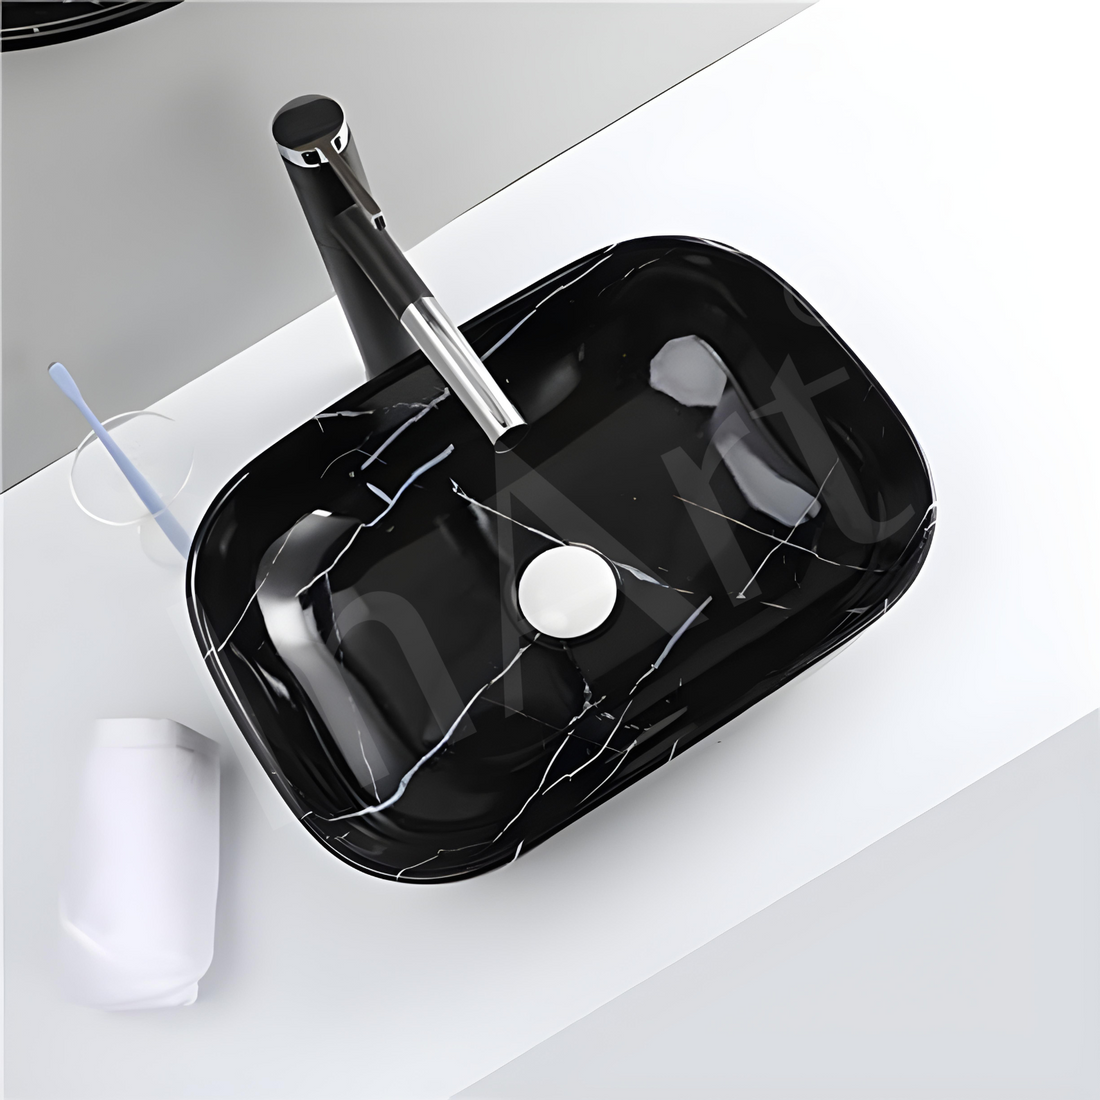 InArt Wash Basin | Counter Top Basin | Black Color | 46x32x14 CM | For Living Room or Bathroom - InArt-Studio